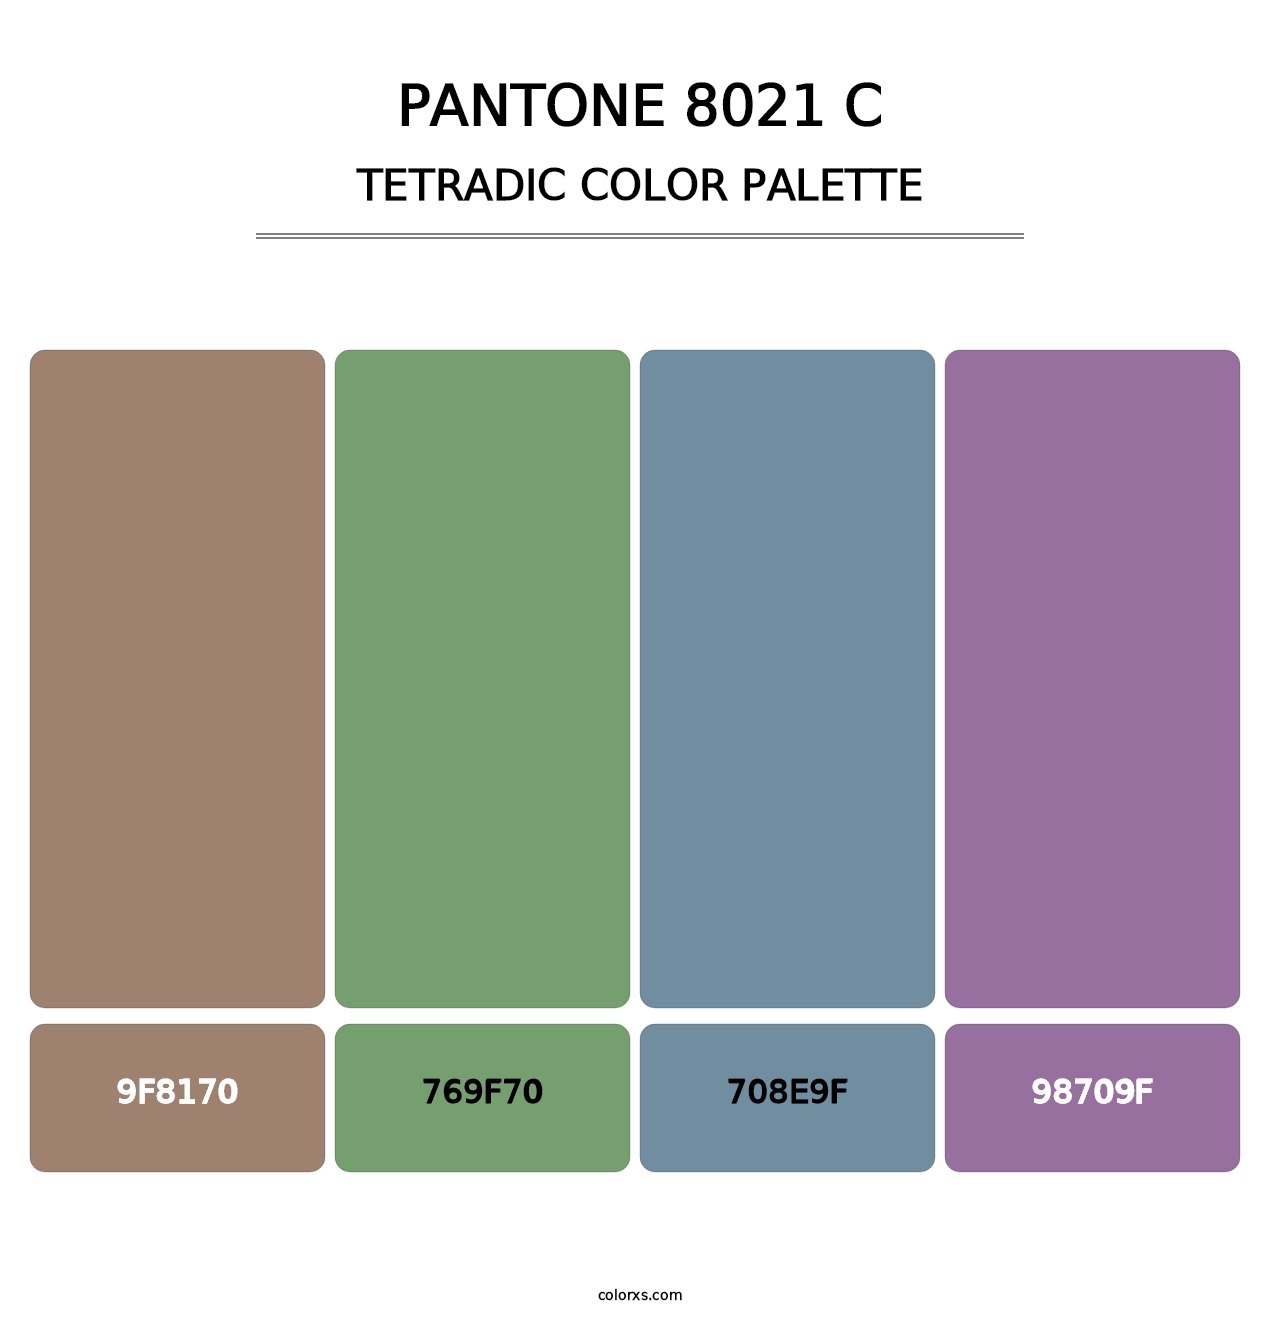 PANTONE 8021 C - Tetradic Color Palette